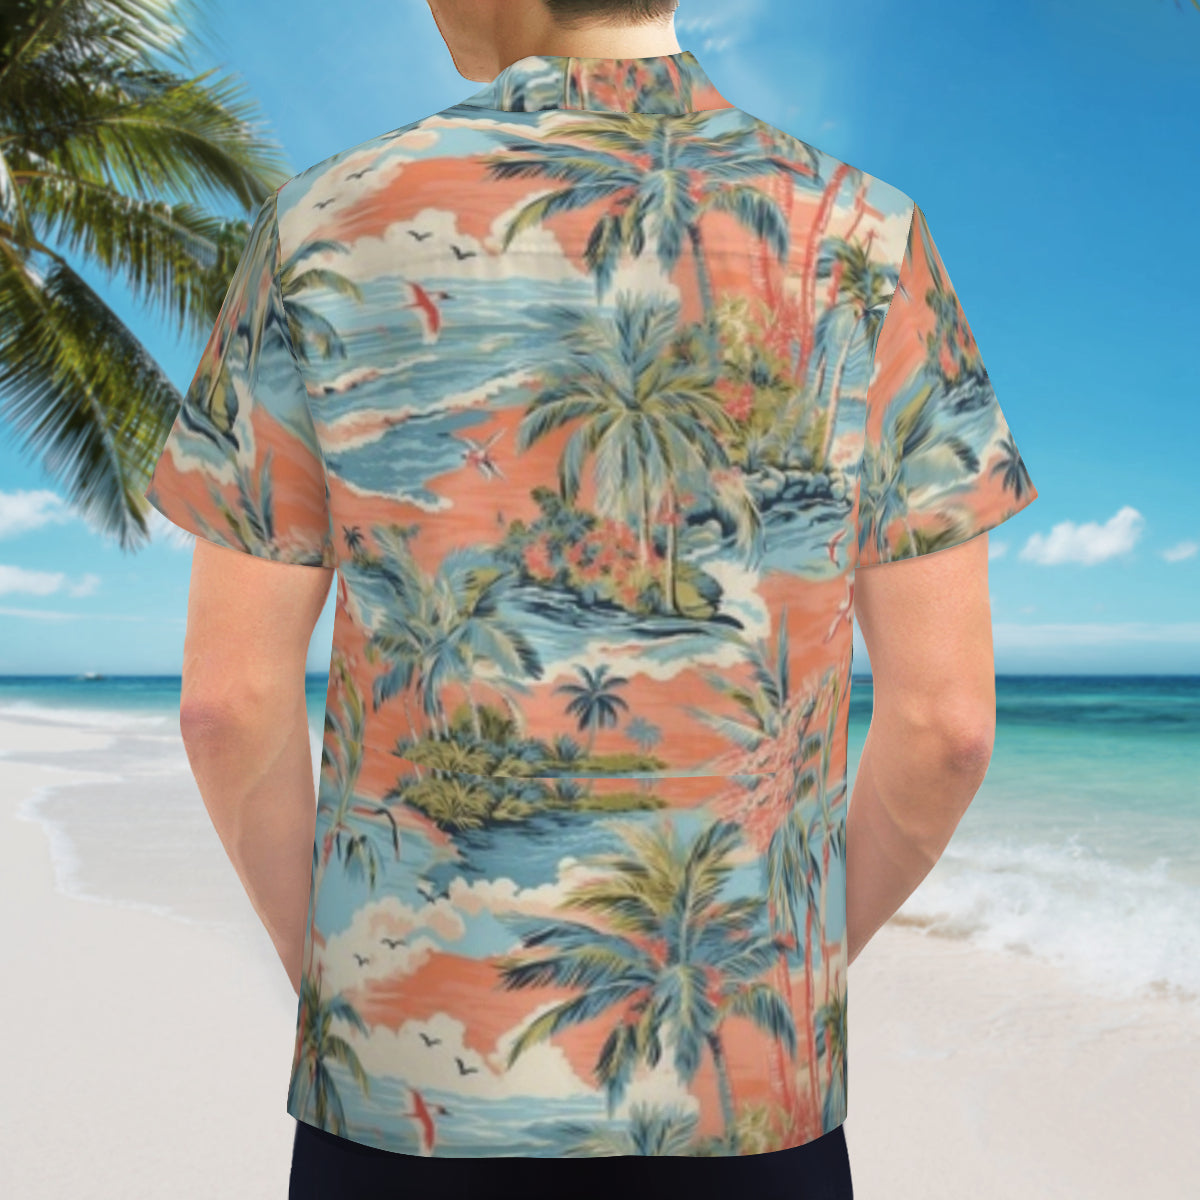 Hawaiian shirt - Orange and blue scene